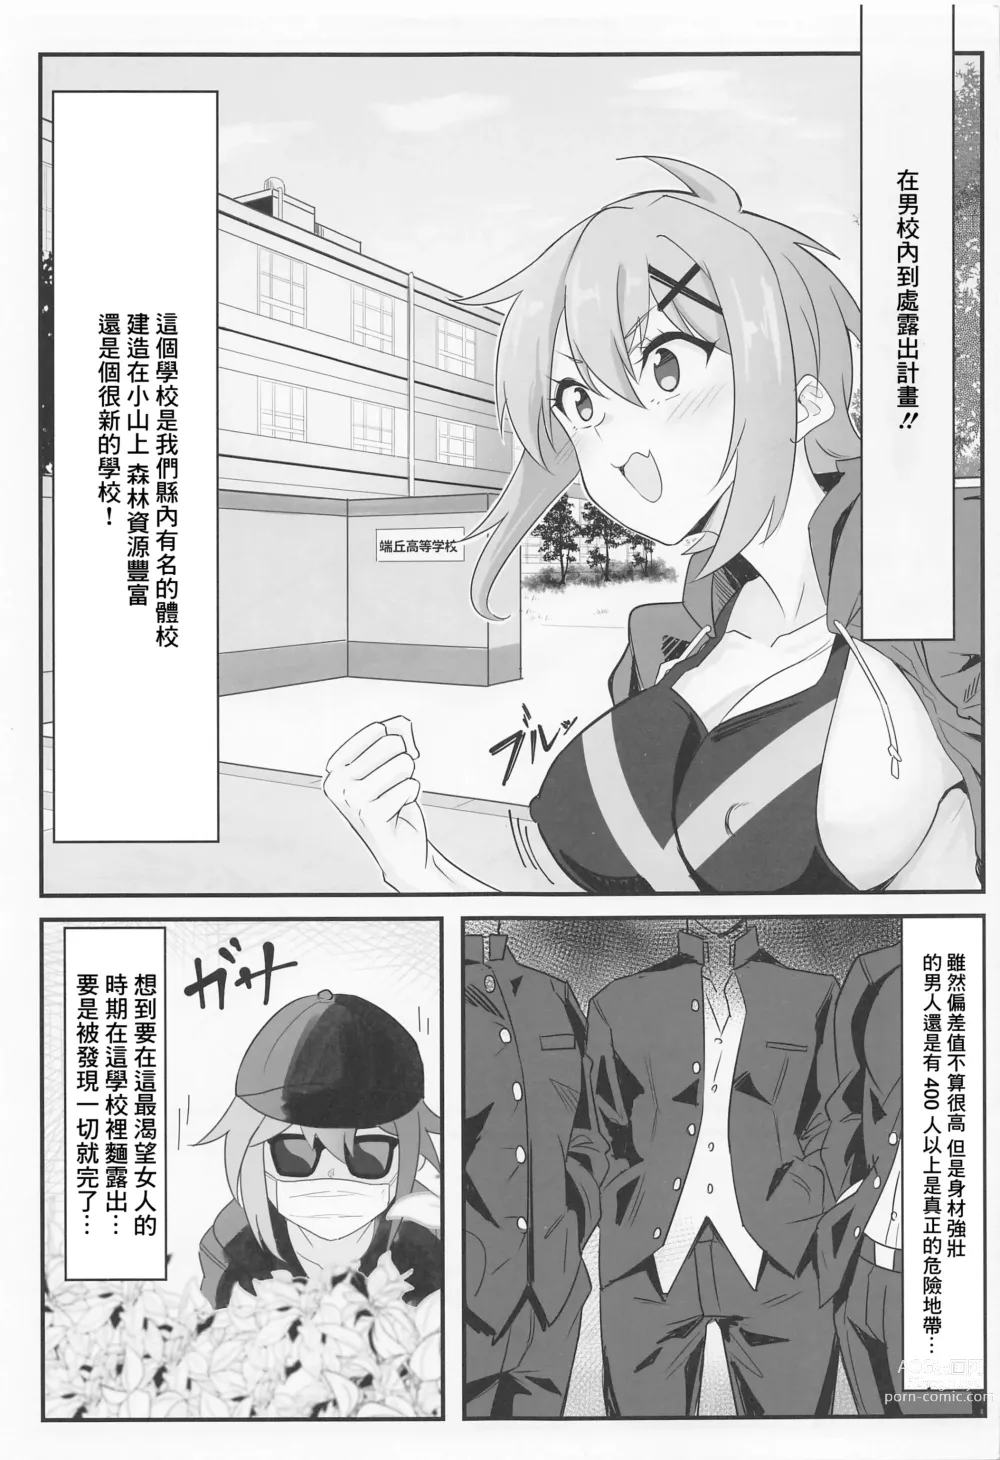 Page 4 of doujinshi Kiri-chan no Danshikounai Roshutsu Haikai Quest